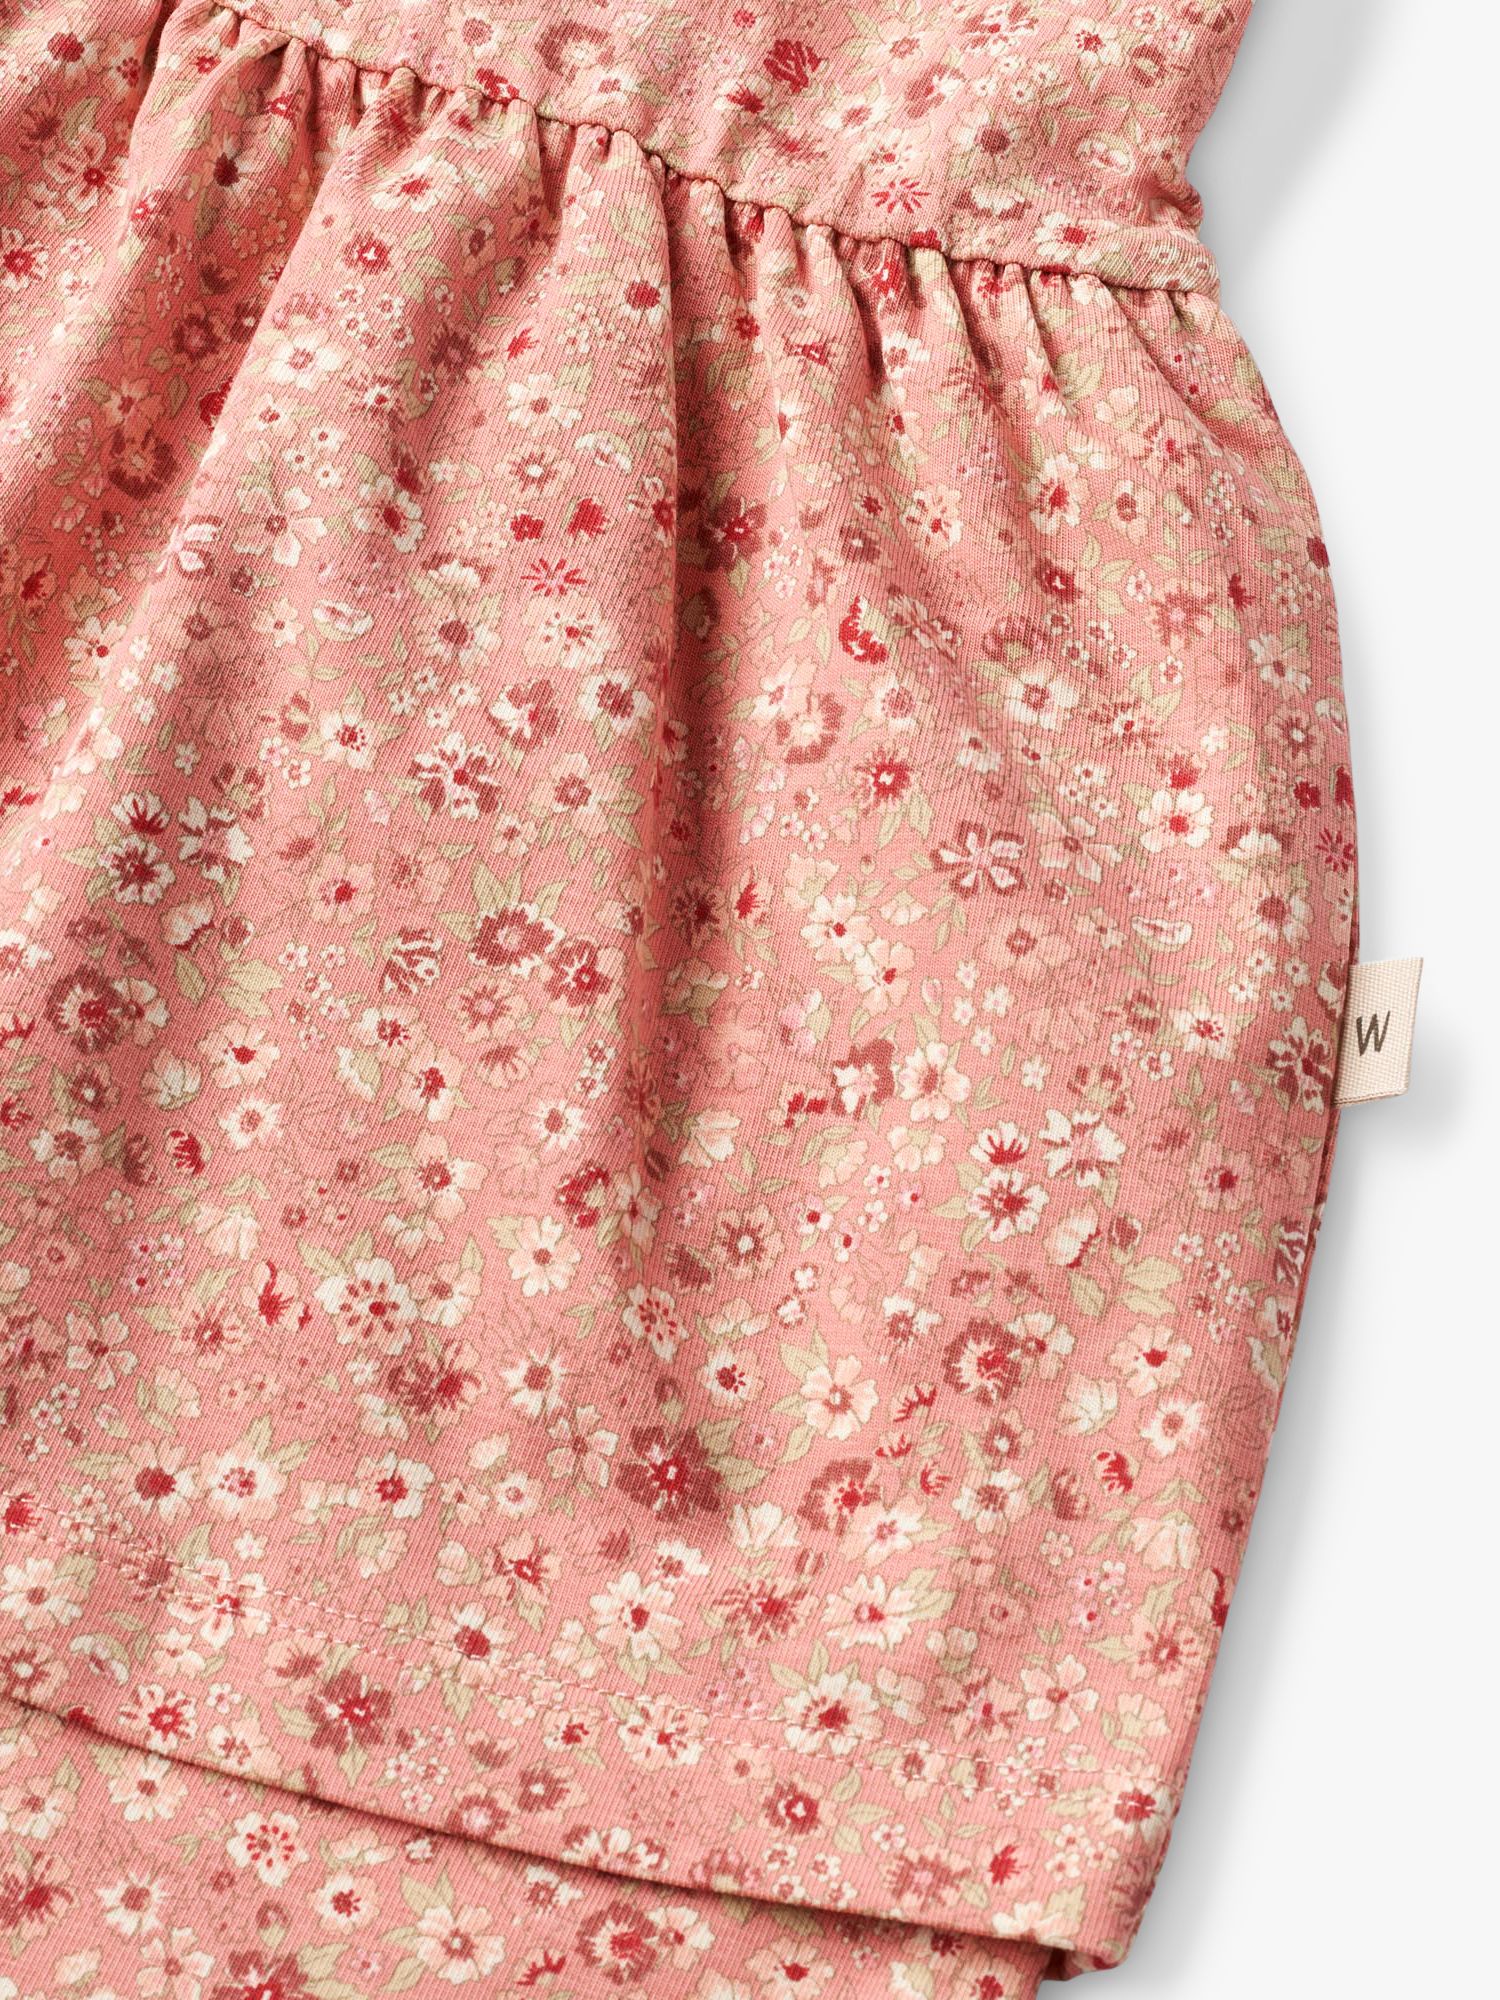 WHEAT Kids' Johanna Organic Cotton Blend Floral Print Dress, Coral, 3 years